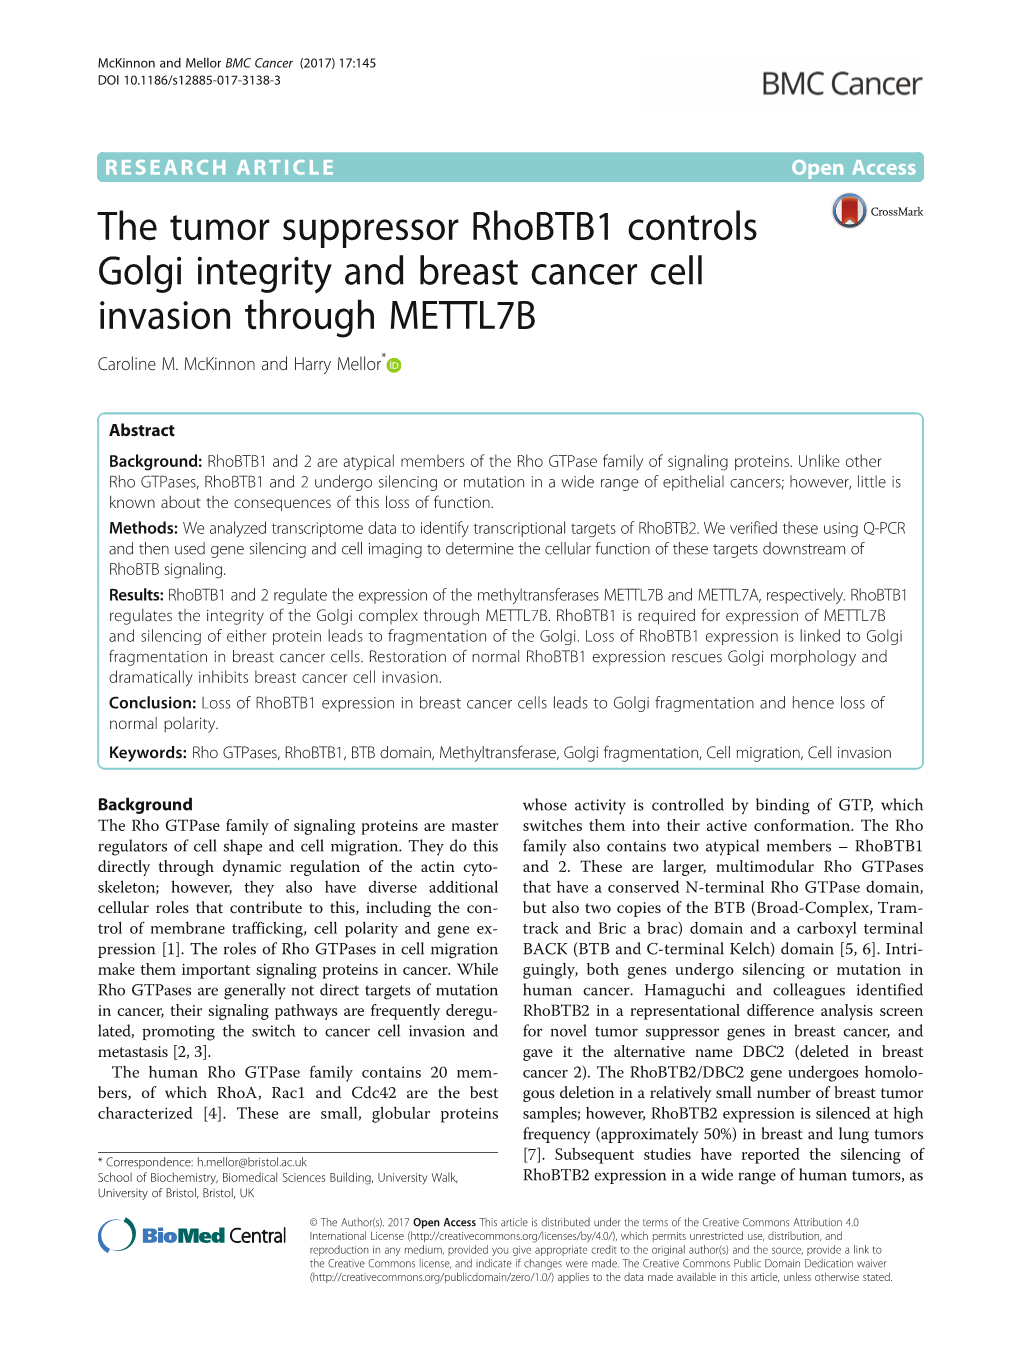 The Tumor Suppressor Rhobtb1 Controls Golgi Integrity and Breast Cancer Cell Invasion Through METTL7B Caroline M